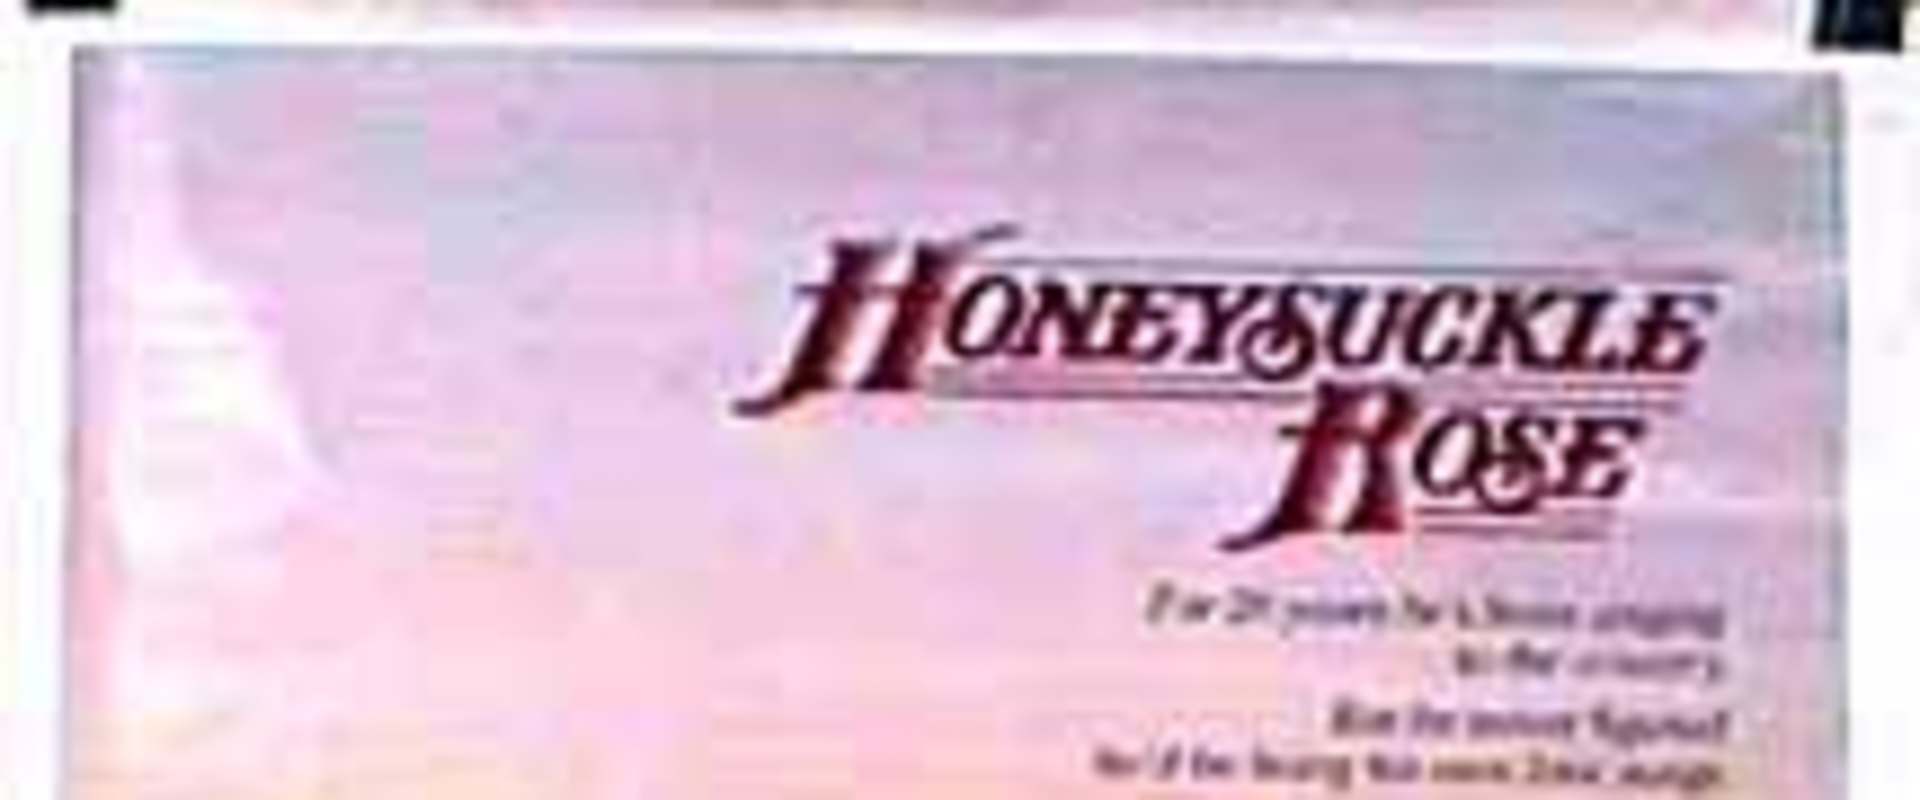 Honeysuckle Rose background 2